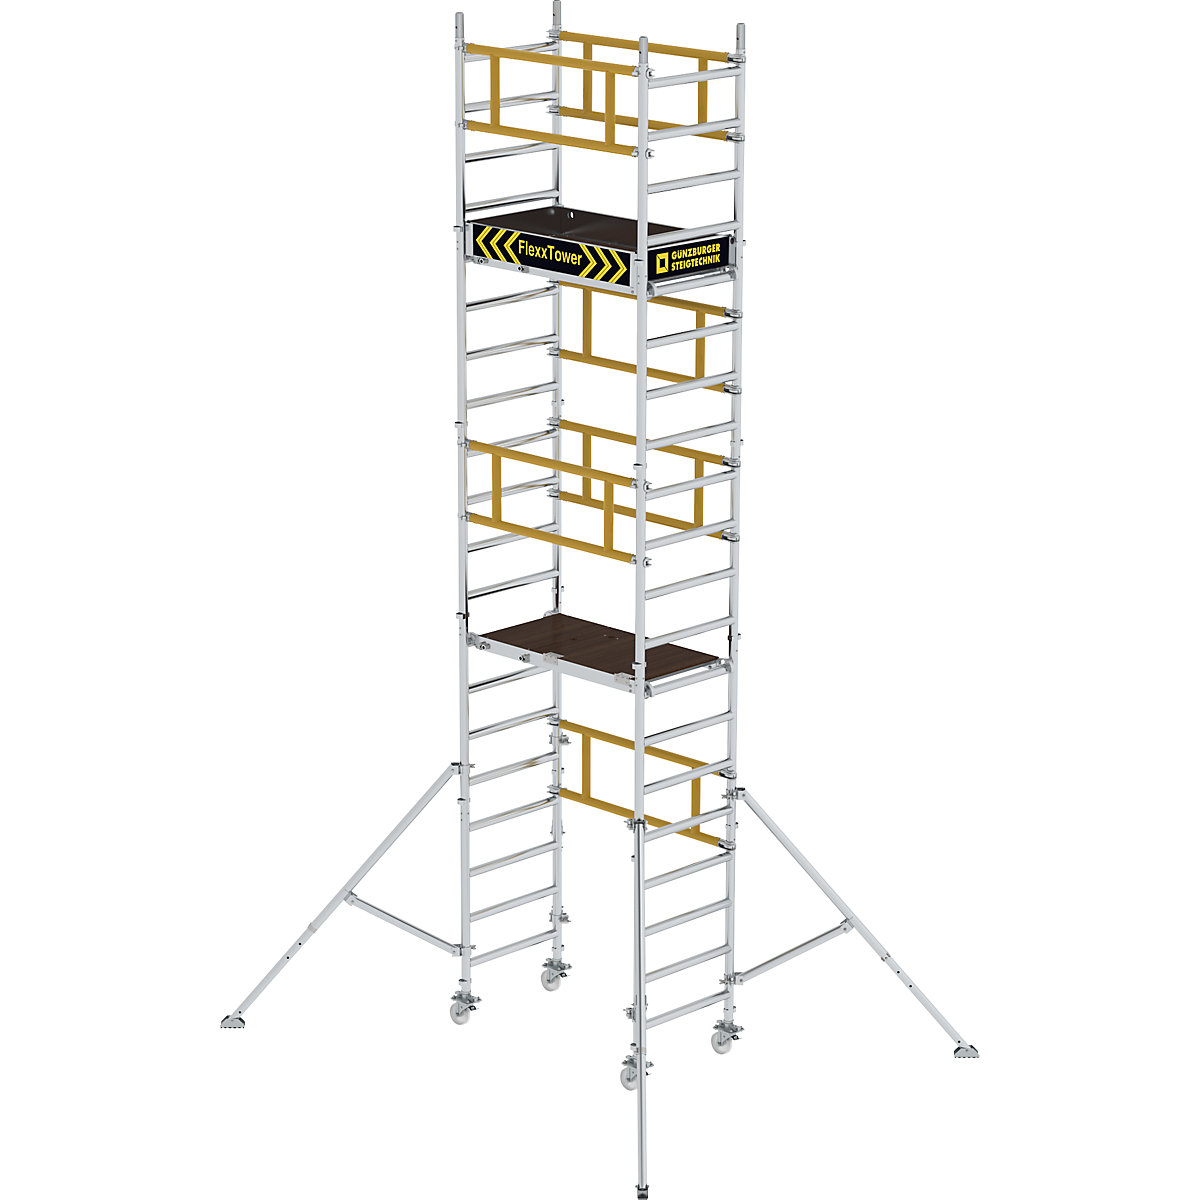 FLEXXTOWER one-person scaffolding – MUNK